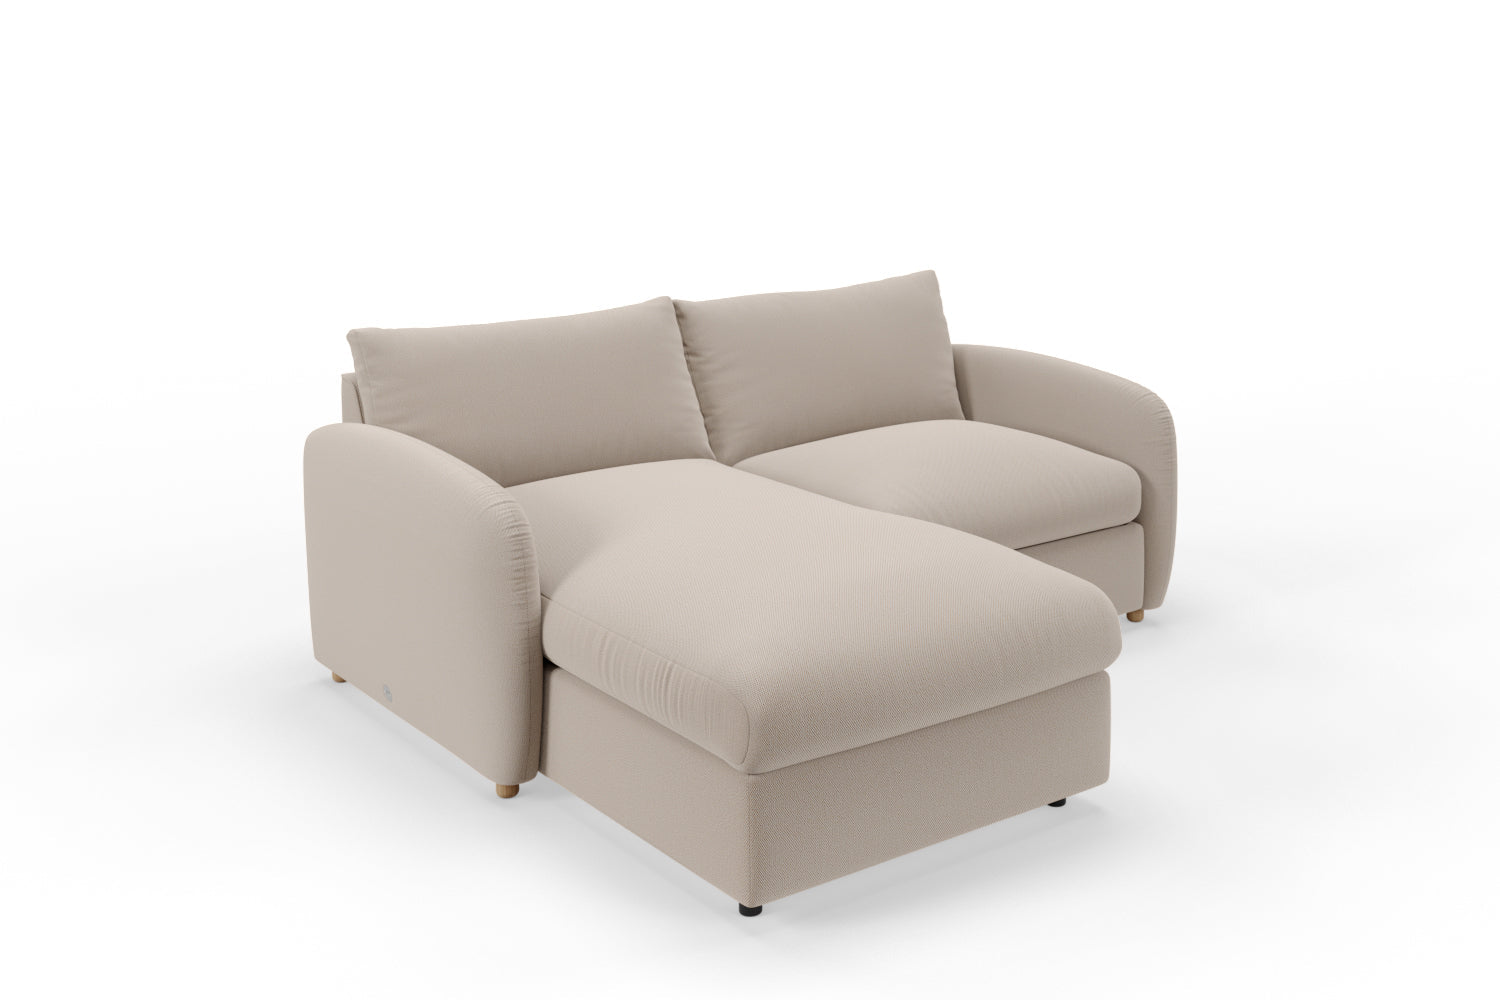 SNUG | The Small Biggie Chaise Corner Sofa in Oatmeal